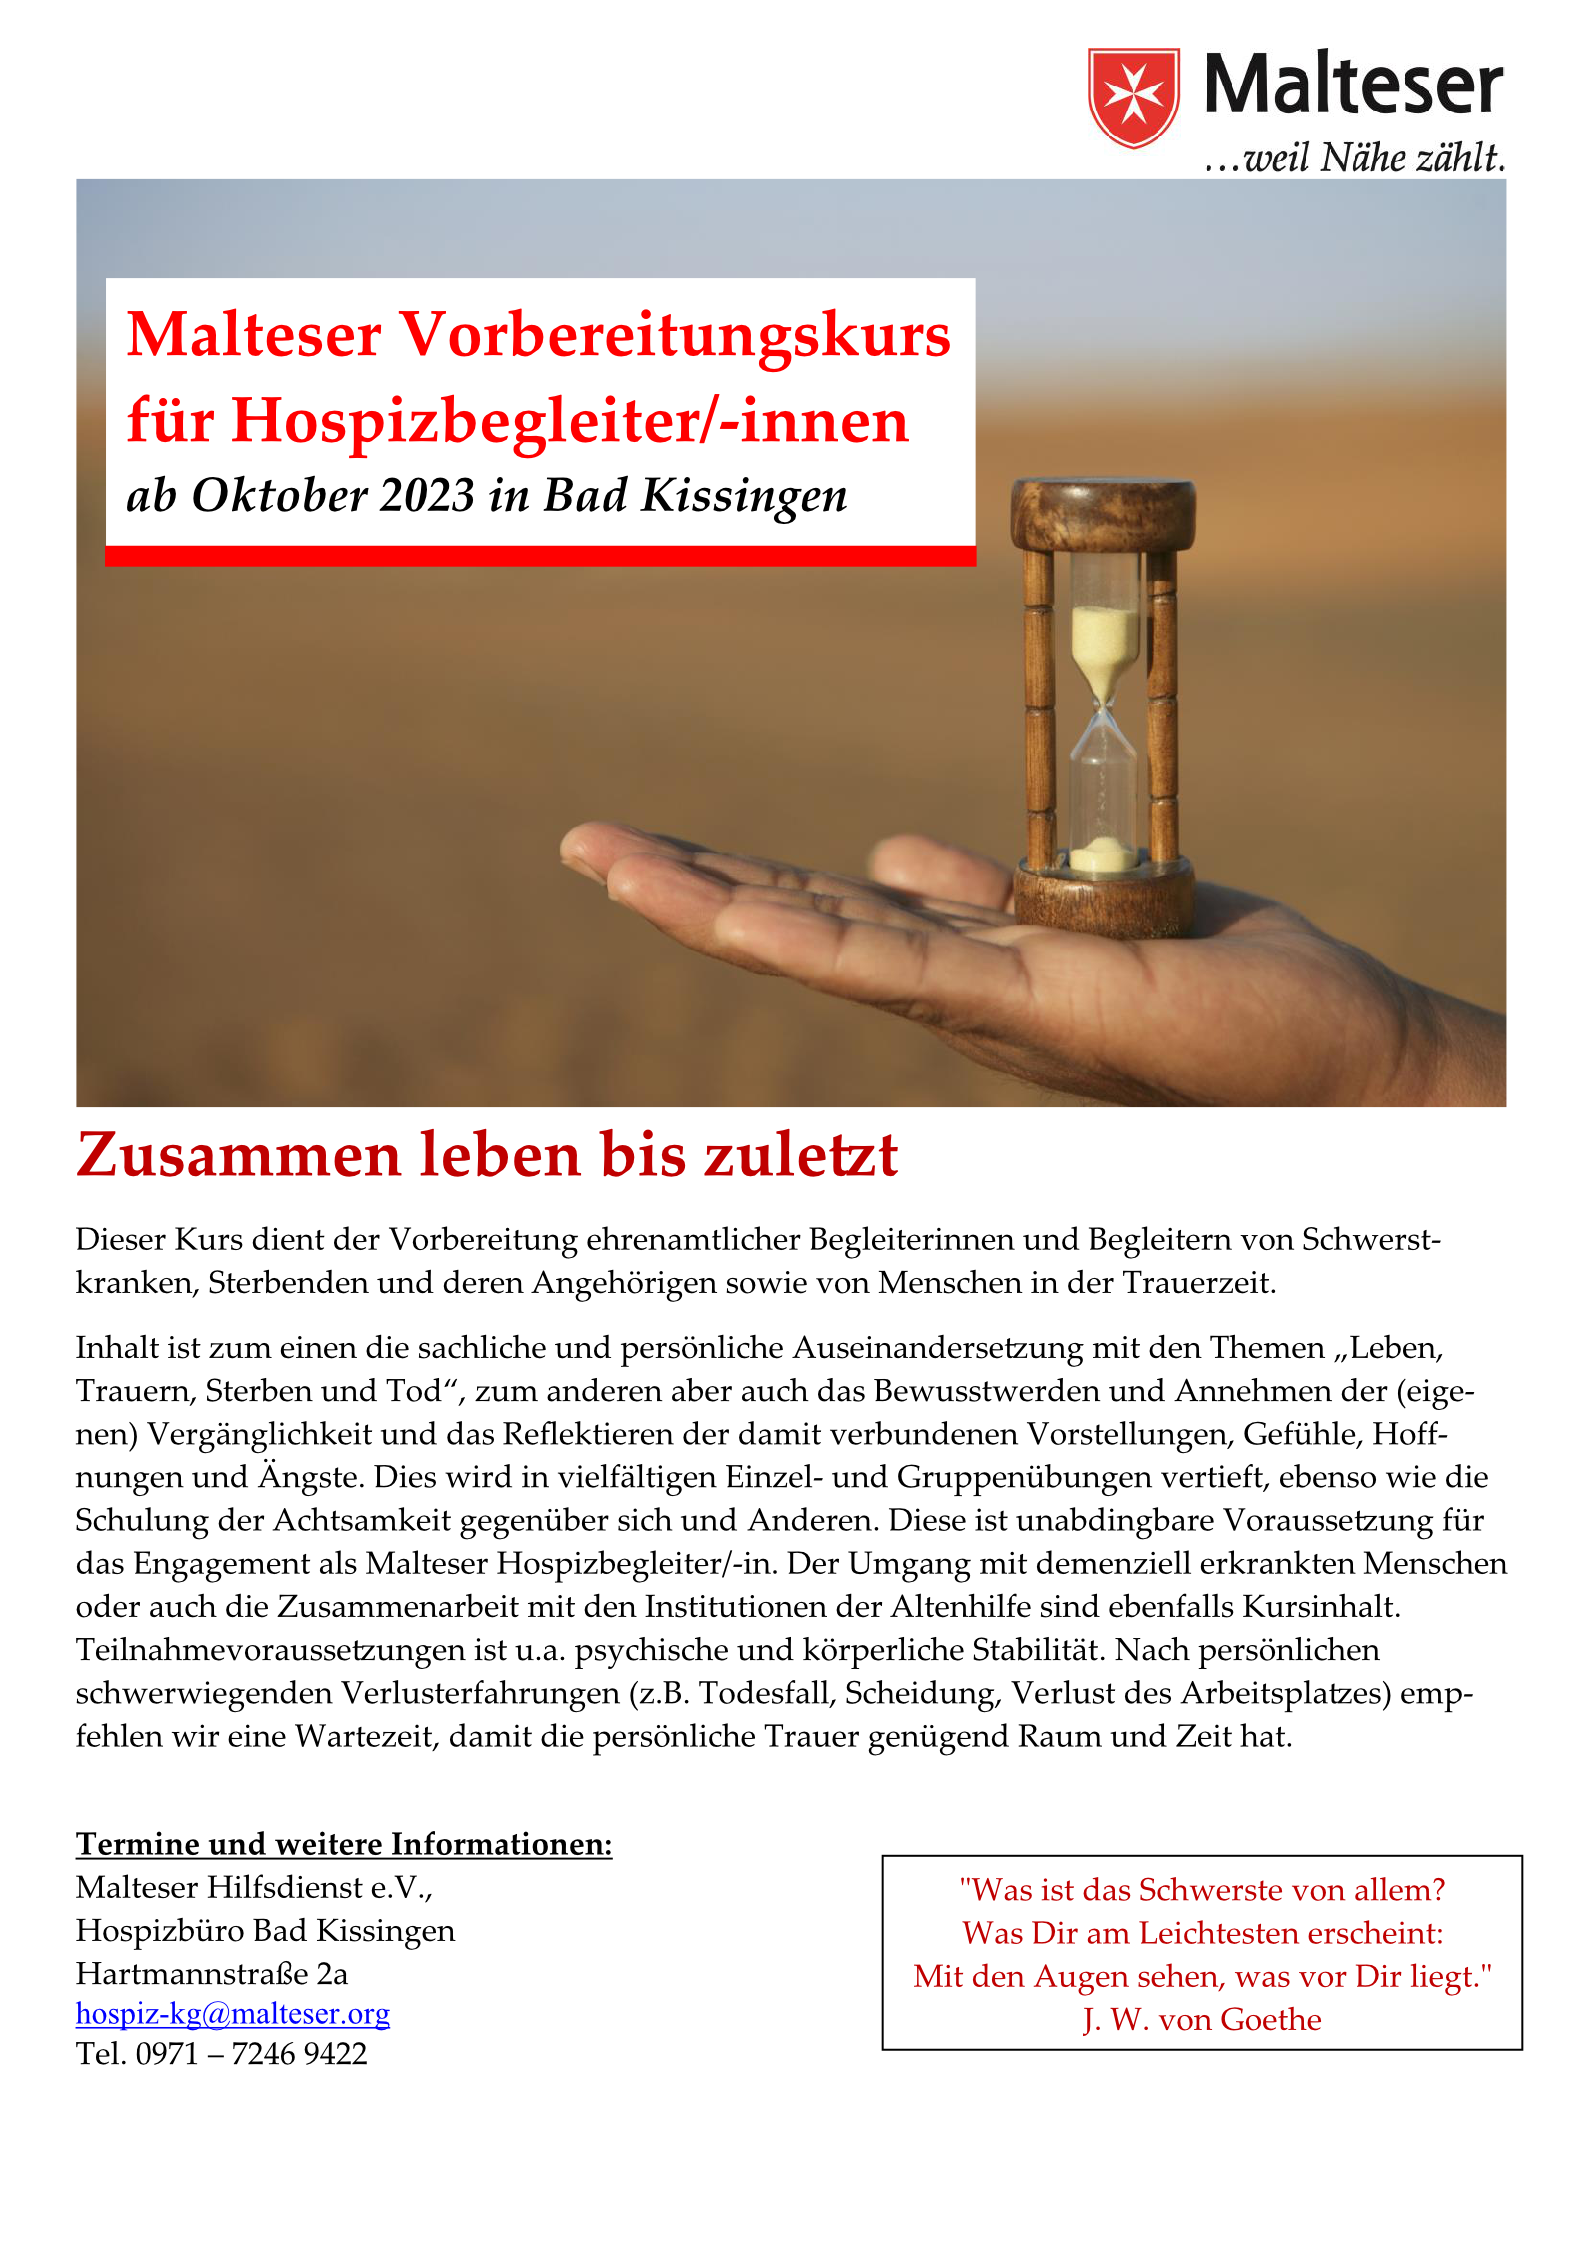 Veranstaltung 10 Hospizkurs Bad Kissingen